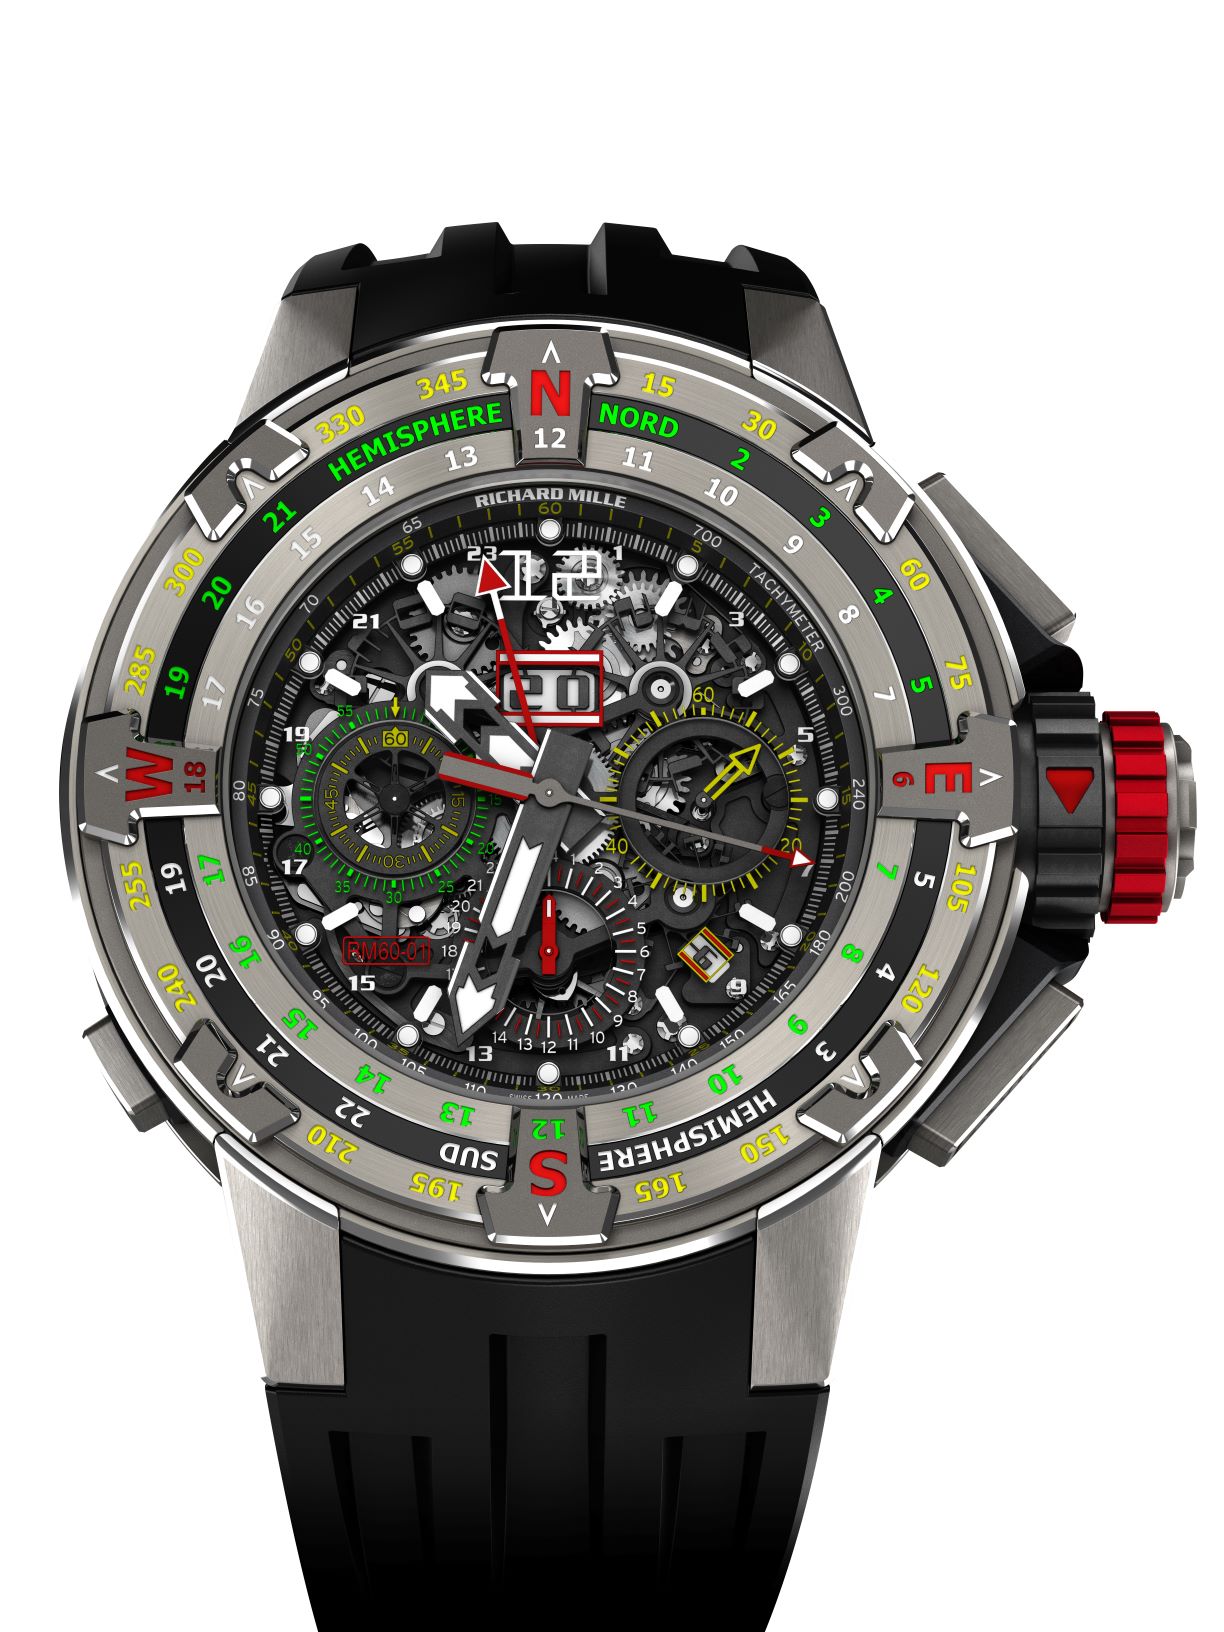 Richard Mille RM 60-01 Flyback Chronograph Regatta Watch